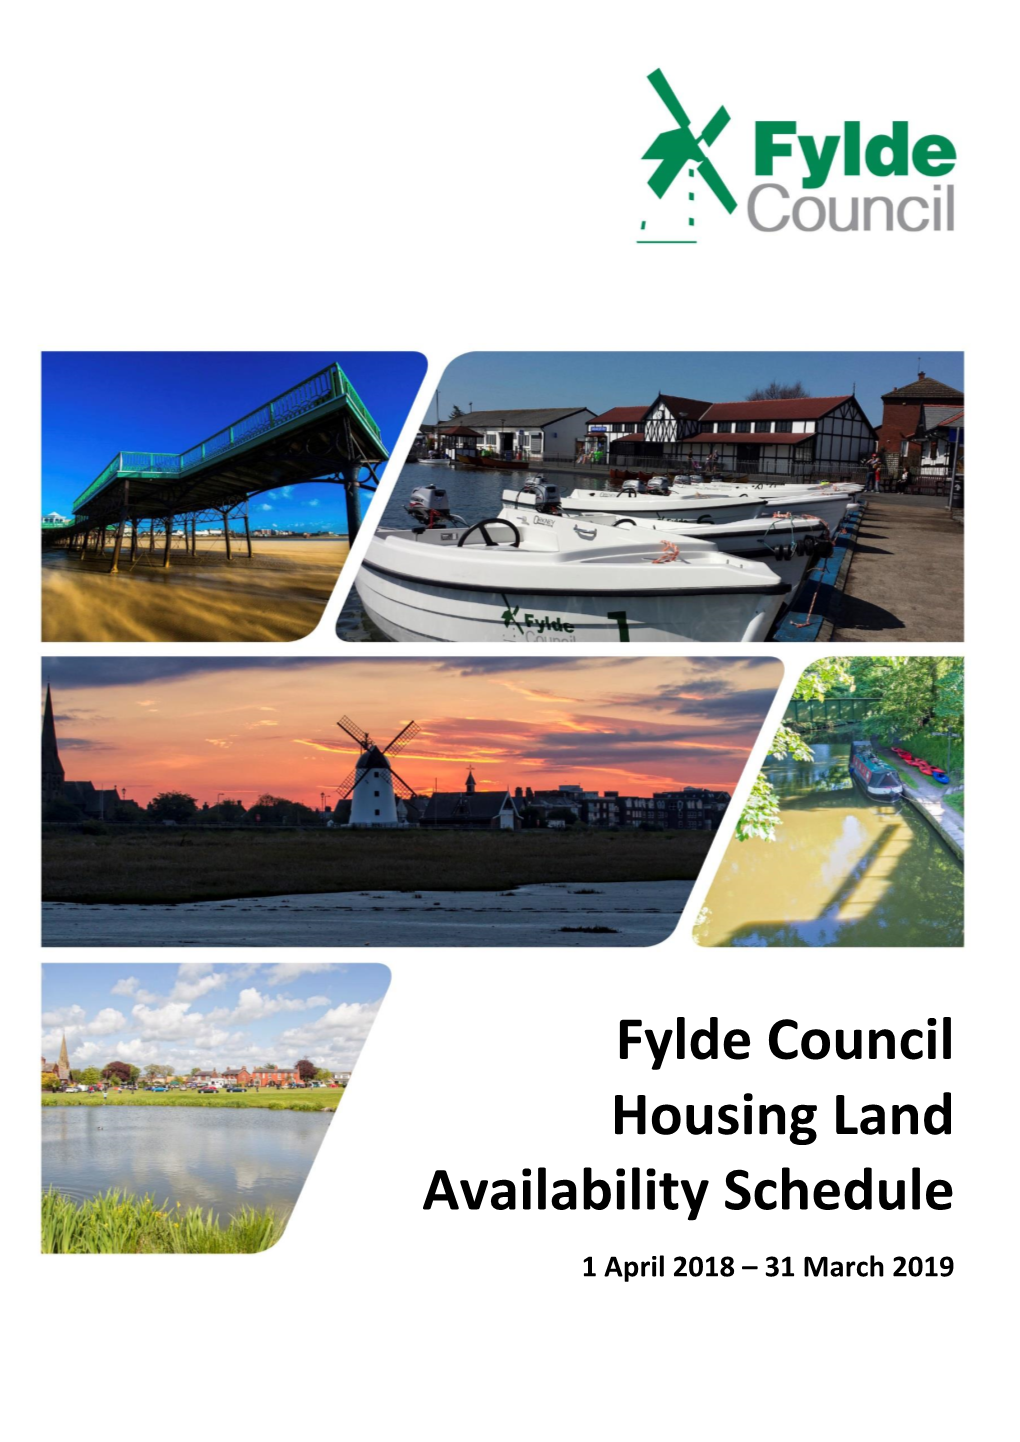 Fylde Council Housing Land Availability Schedule 2019